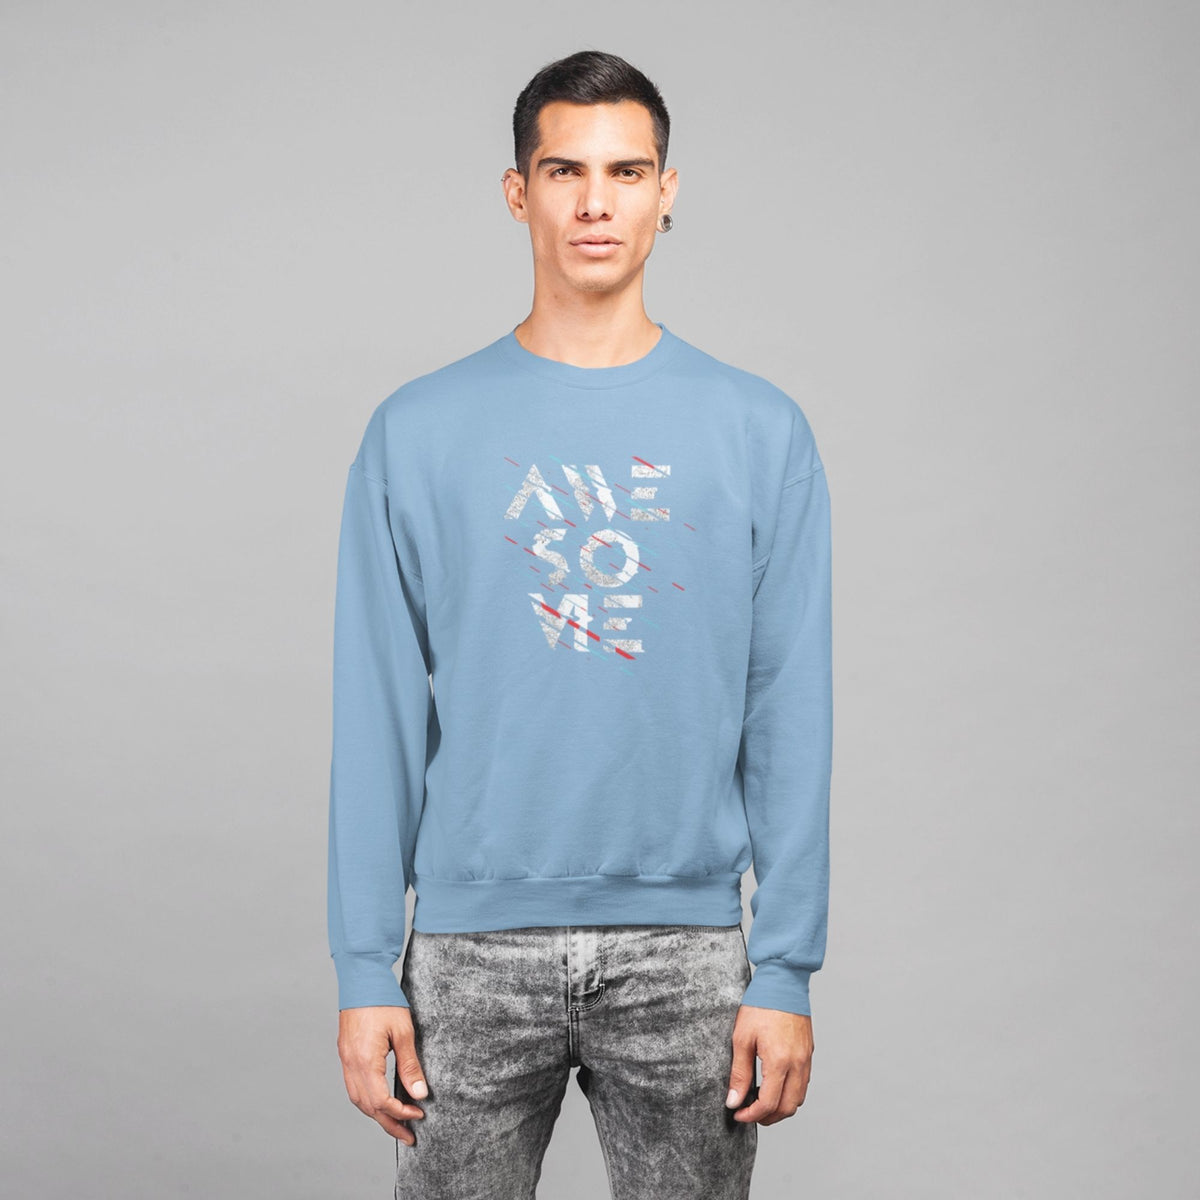 awesome-cotton-printed-unisex-light-blue-men-model-sweatshirt-gogirgit-com